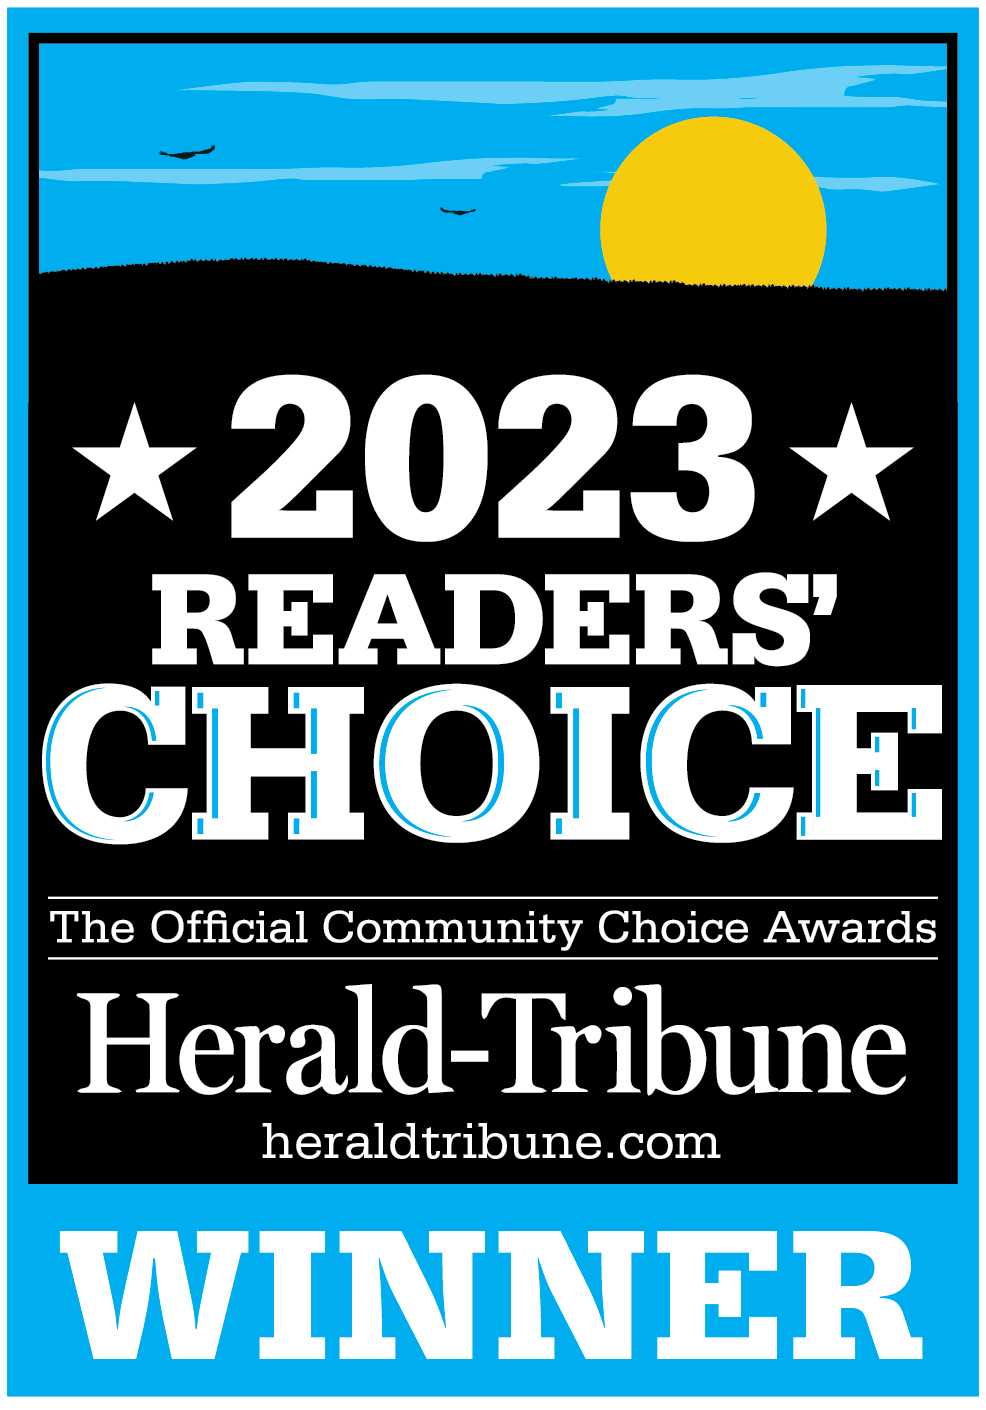 2023 Readers' Choirce, THe official Community Choice Awards, Herald - Tribune, HeraldTribune.com, Winner